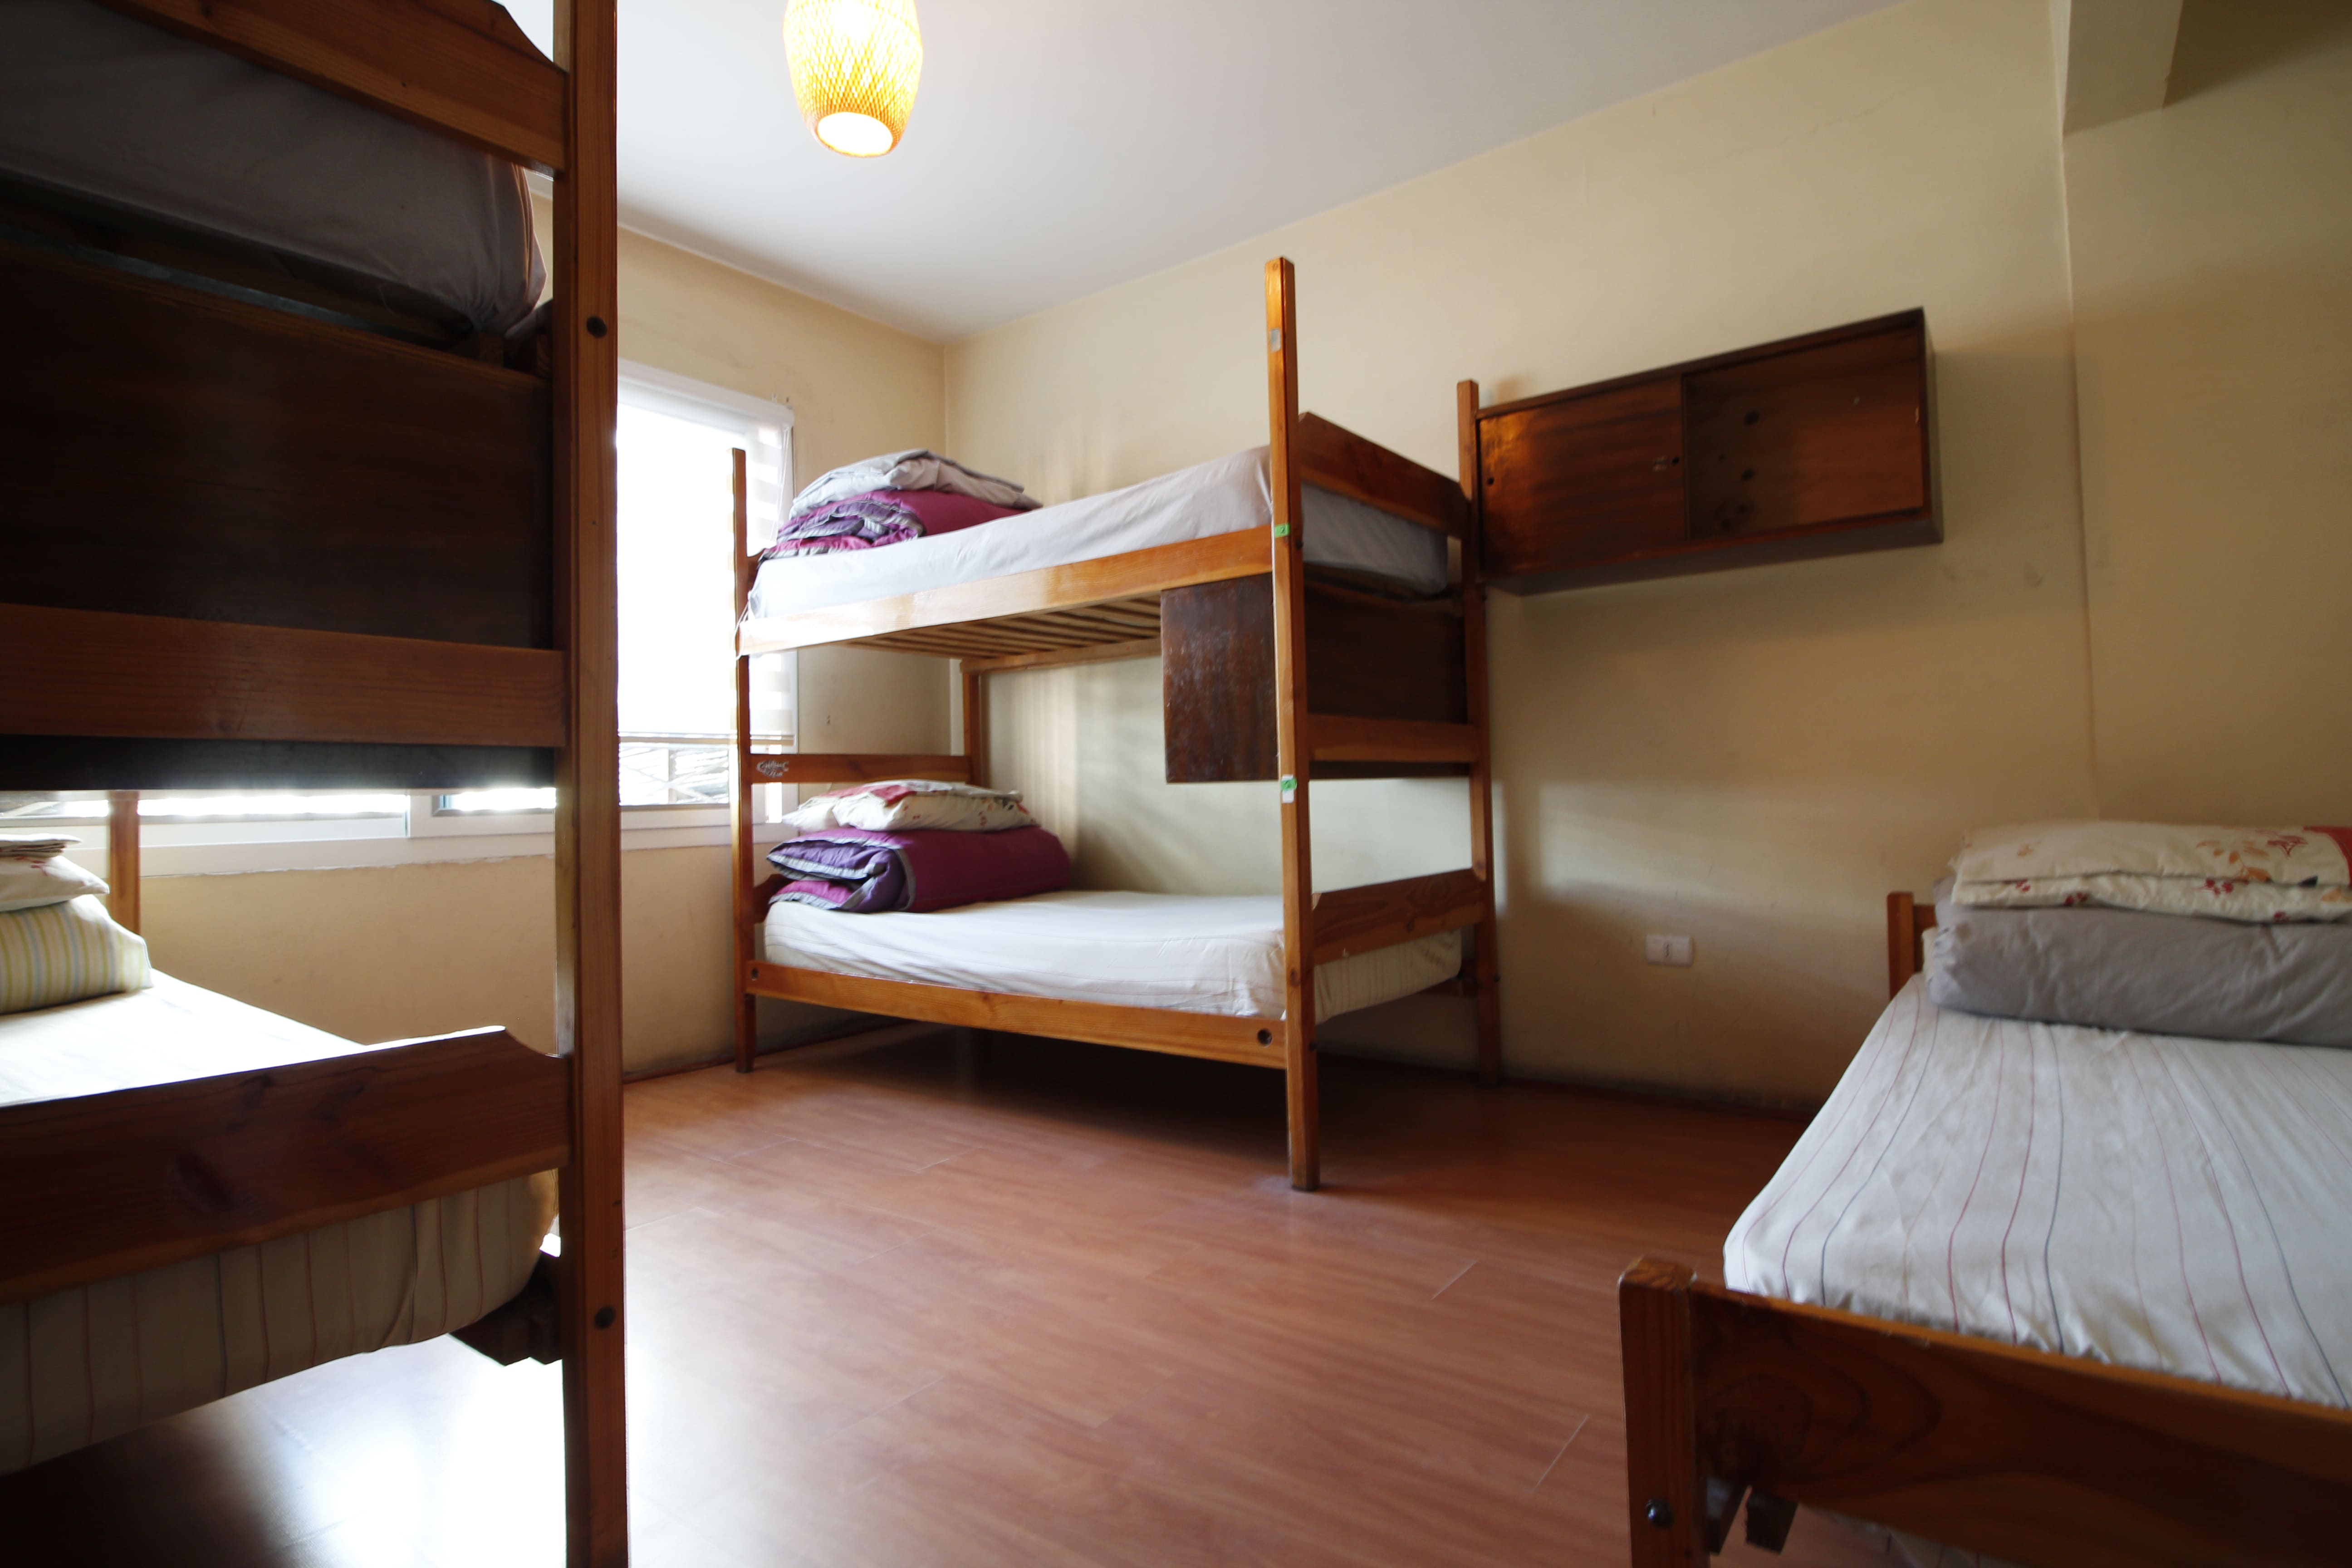 Hostel, hostel iquique,Backpackers,Iquique,Chile. Reserva Online, Hotel, Habitaciones, Alojamiento.Chile. Norte de Chile